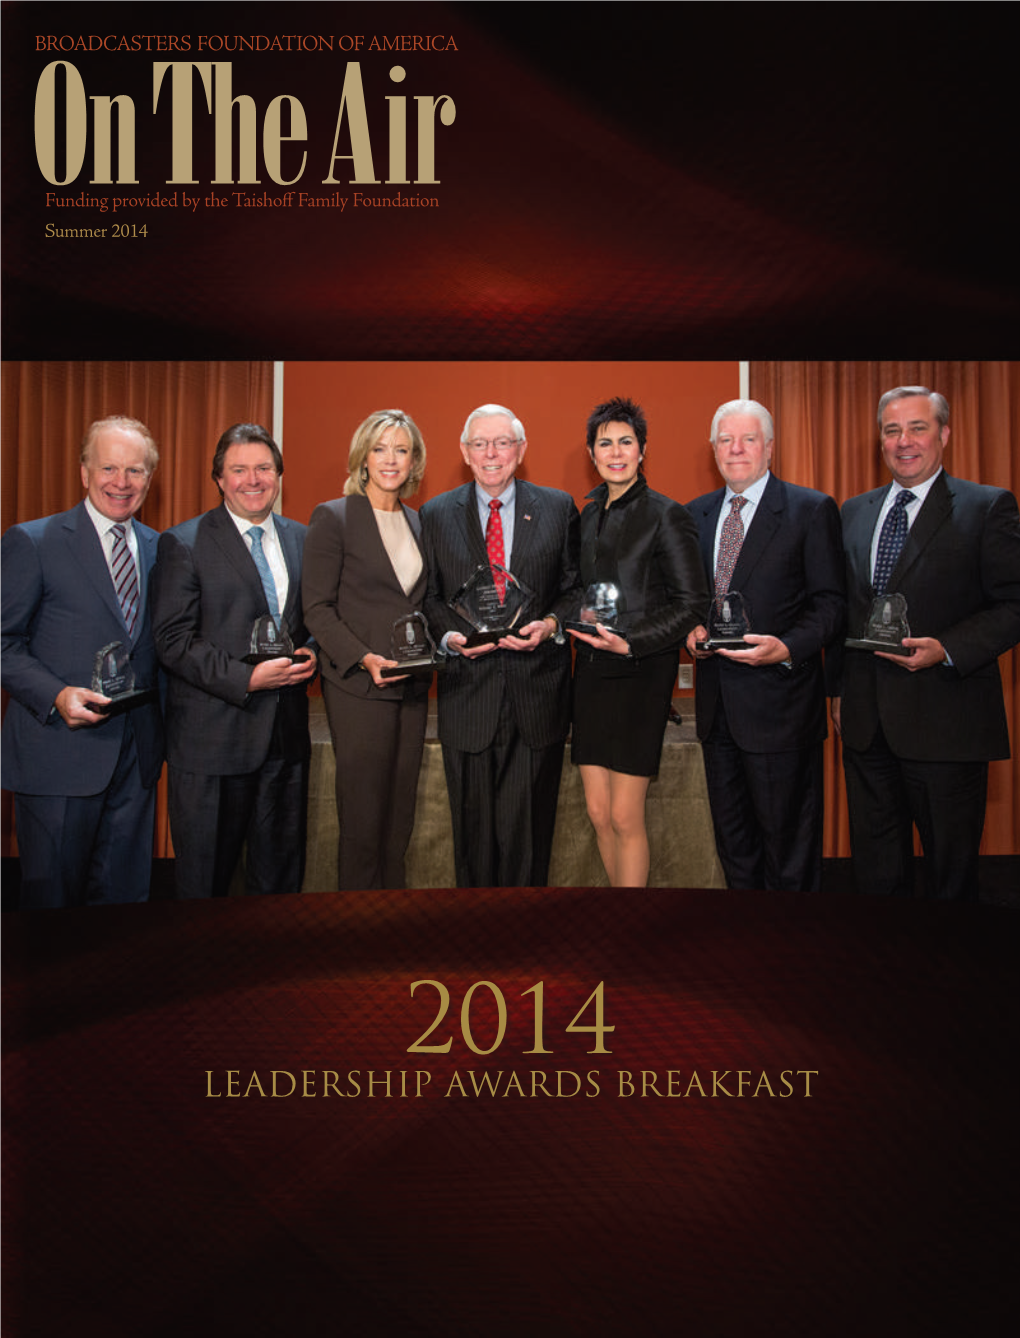 Leadership Awards Breakfast